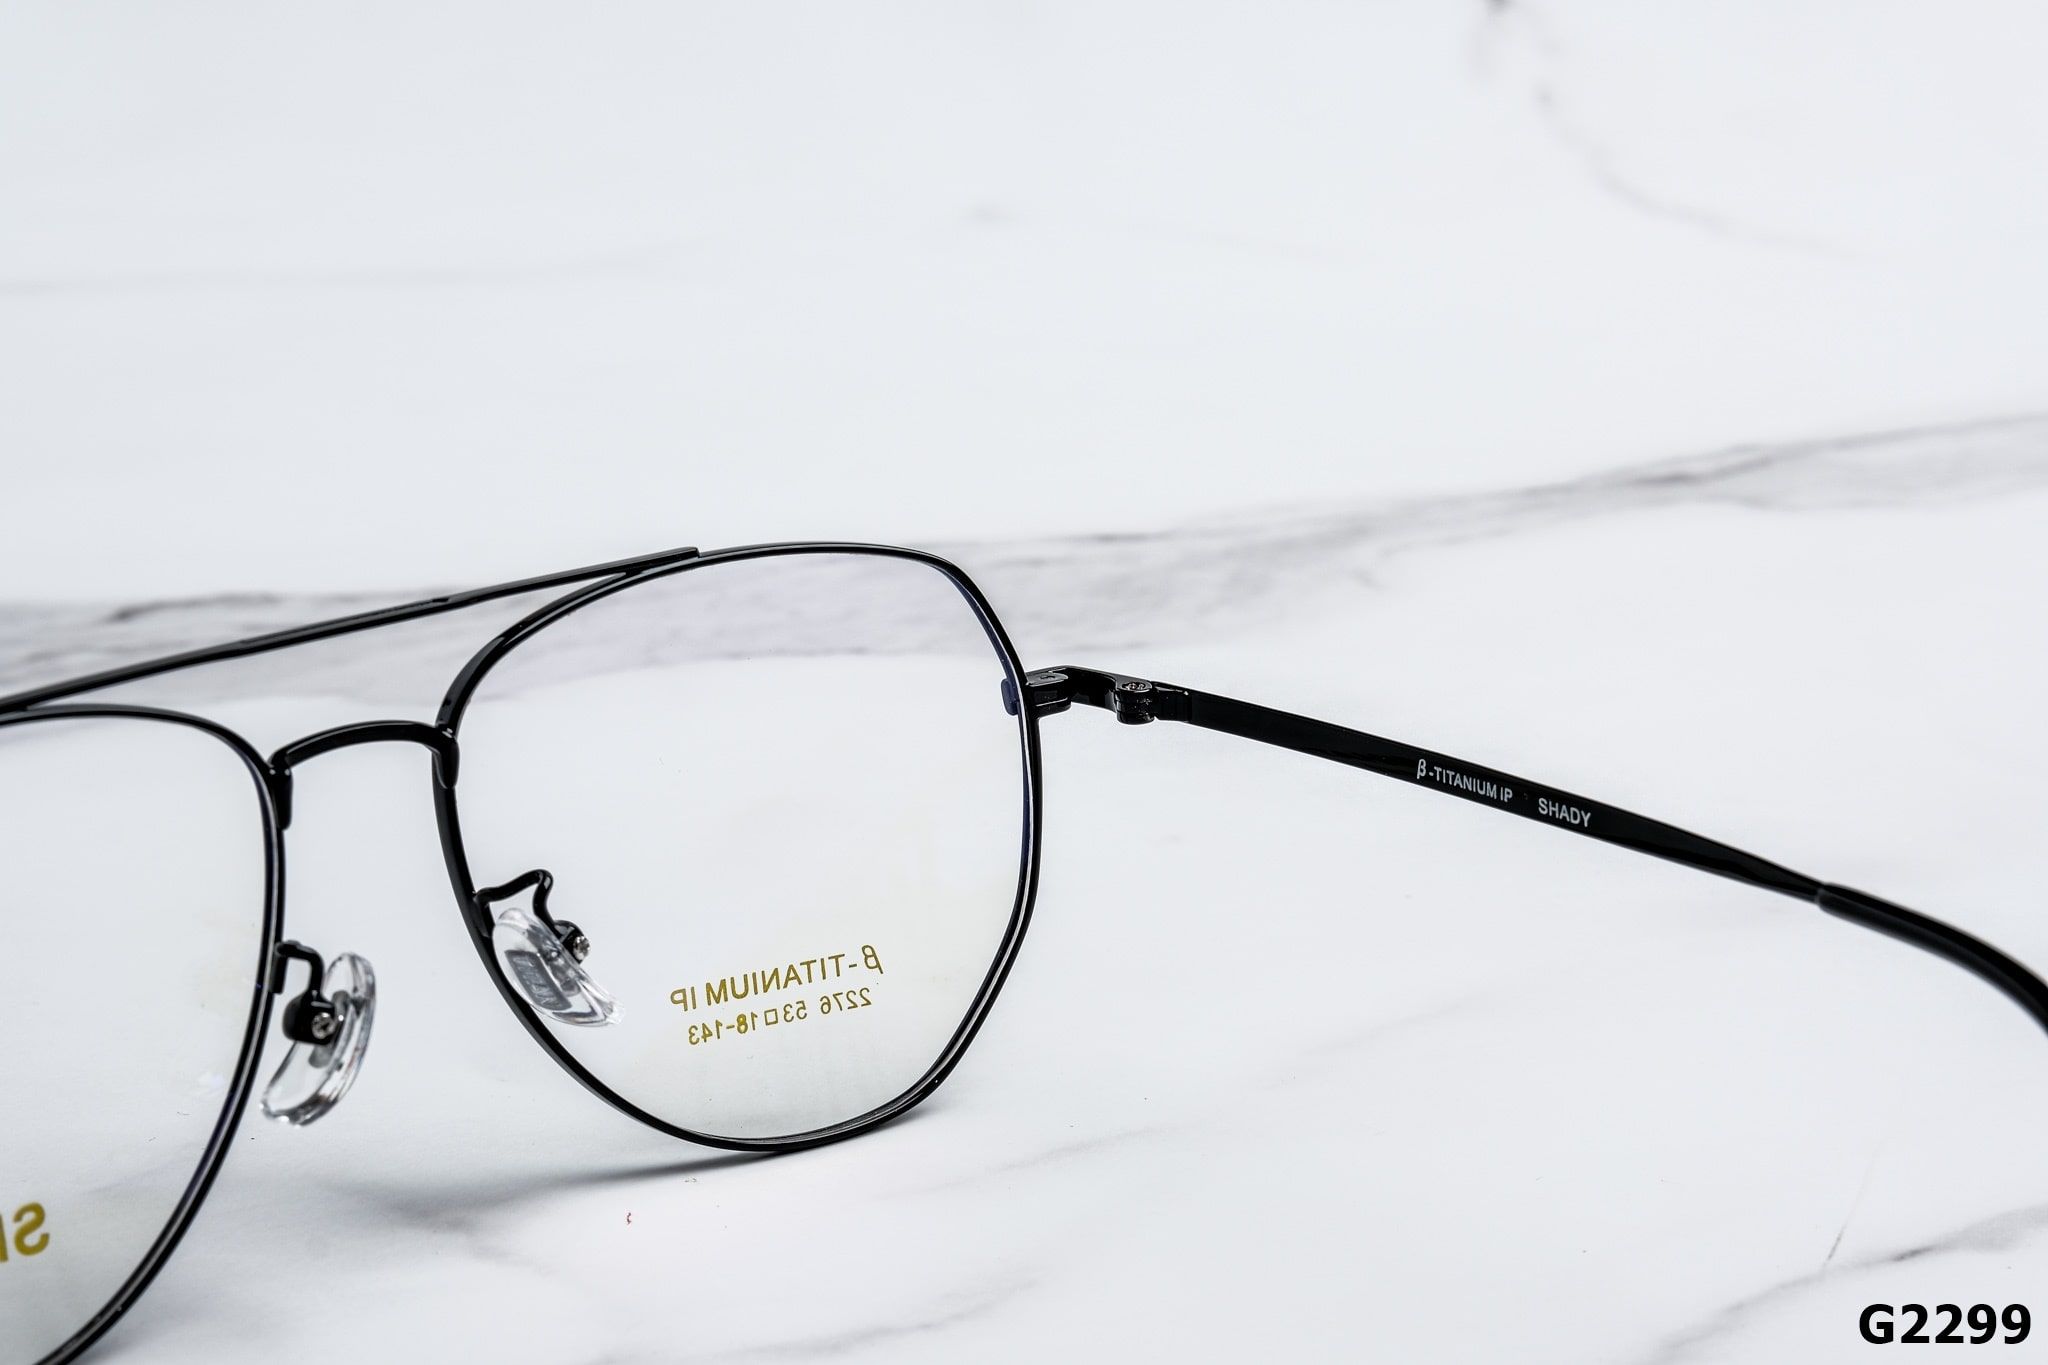  SHADY Eyewear - Glasses - G2299 